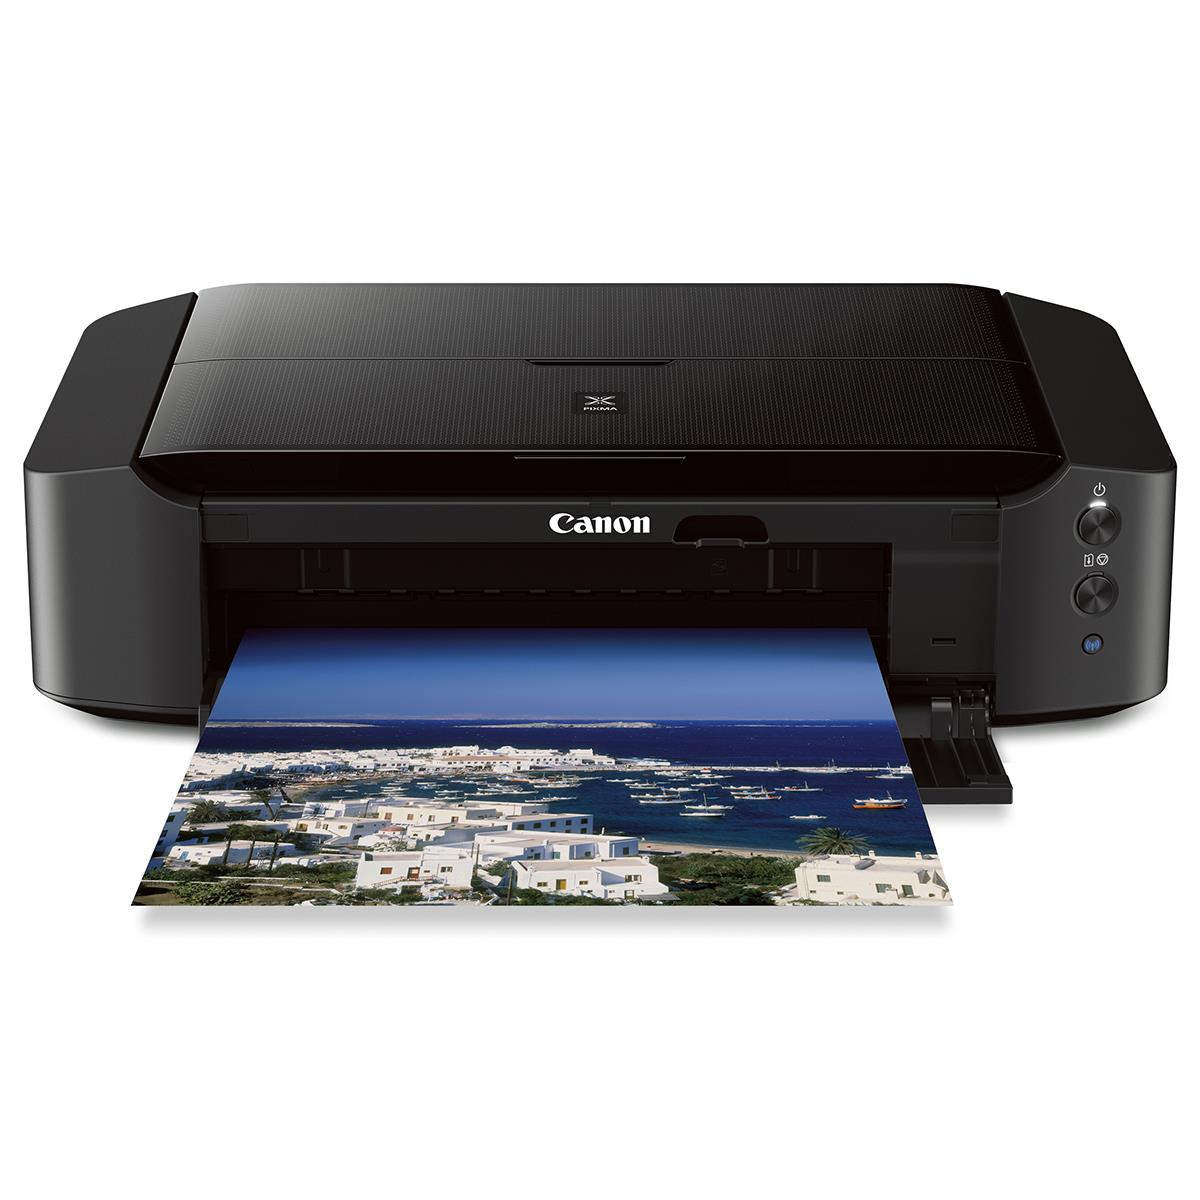 Image of Canon PIXMA iP8720 Wireless Inkjet Photo Printer